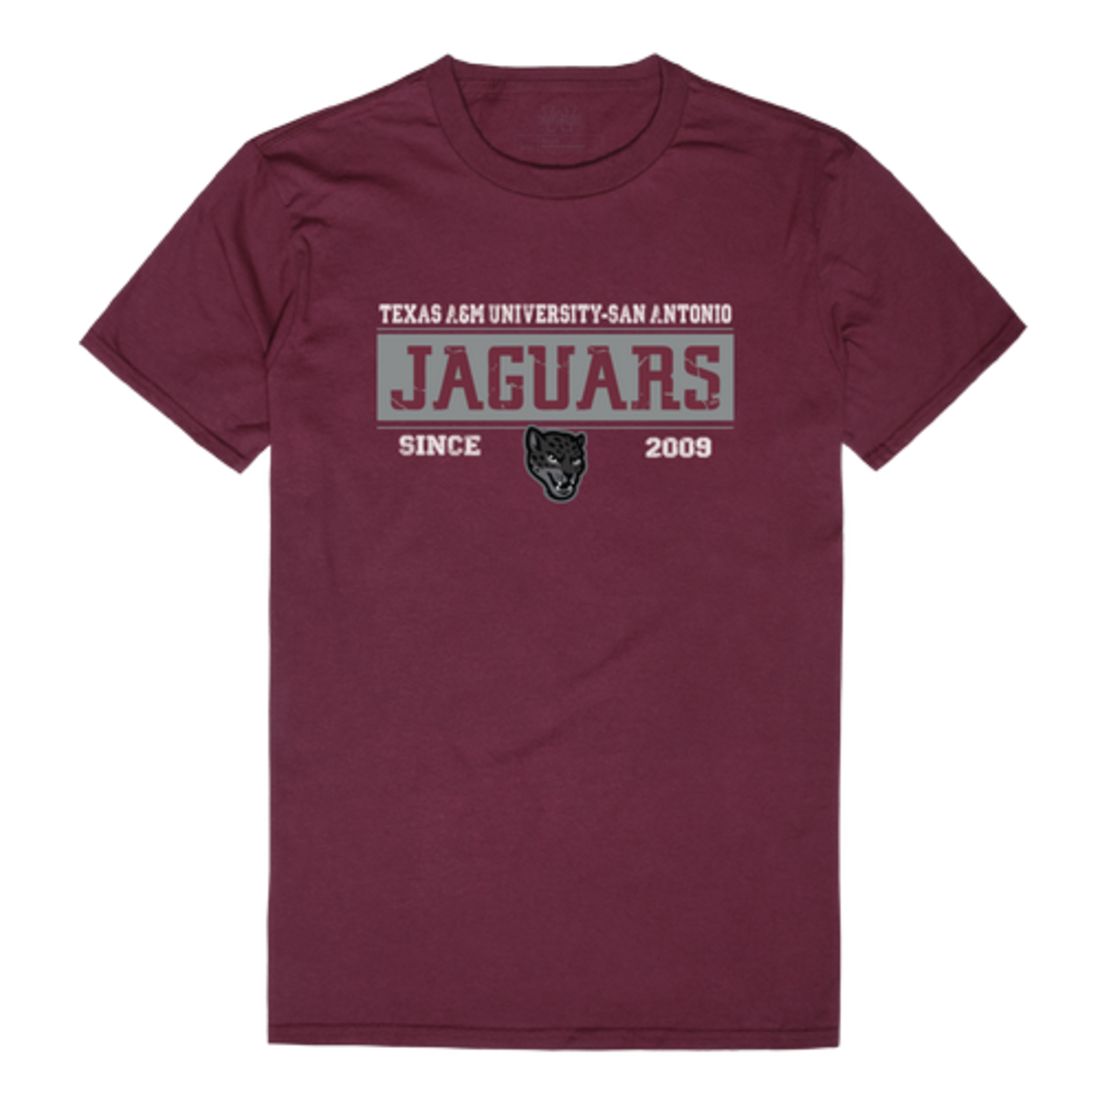 Texas A&M University-San Antonio Jaguars Established T-Shirt Tee